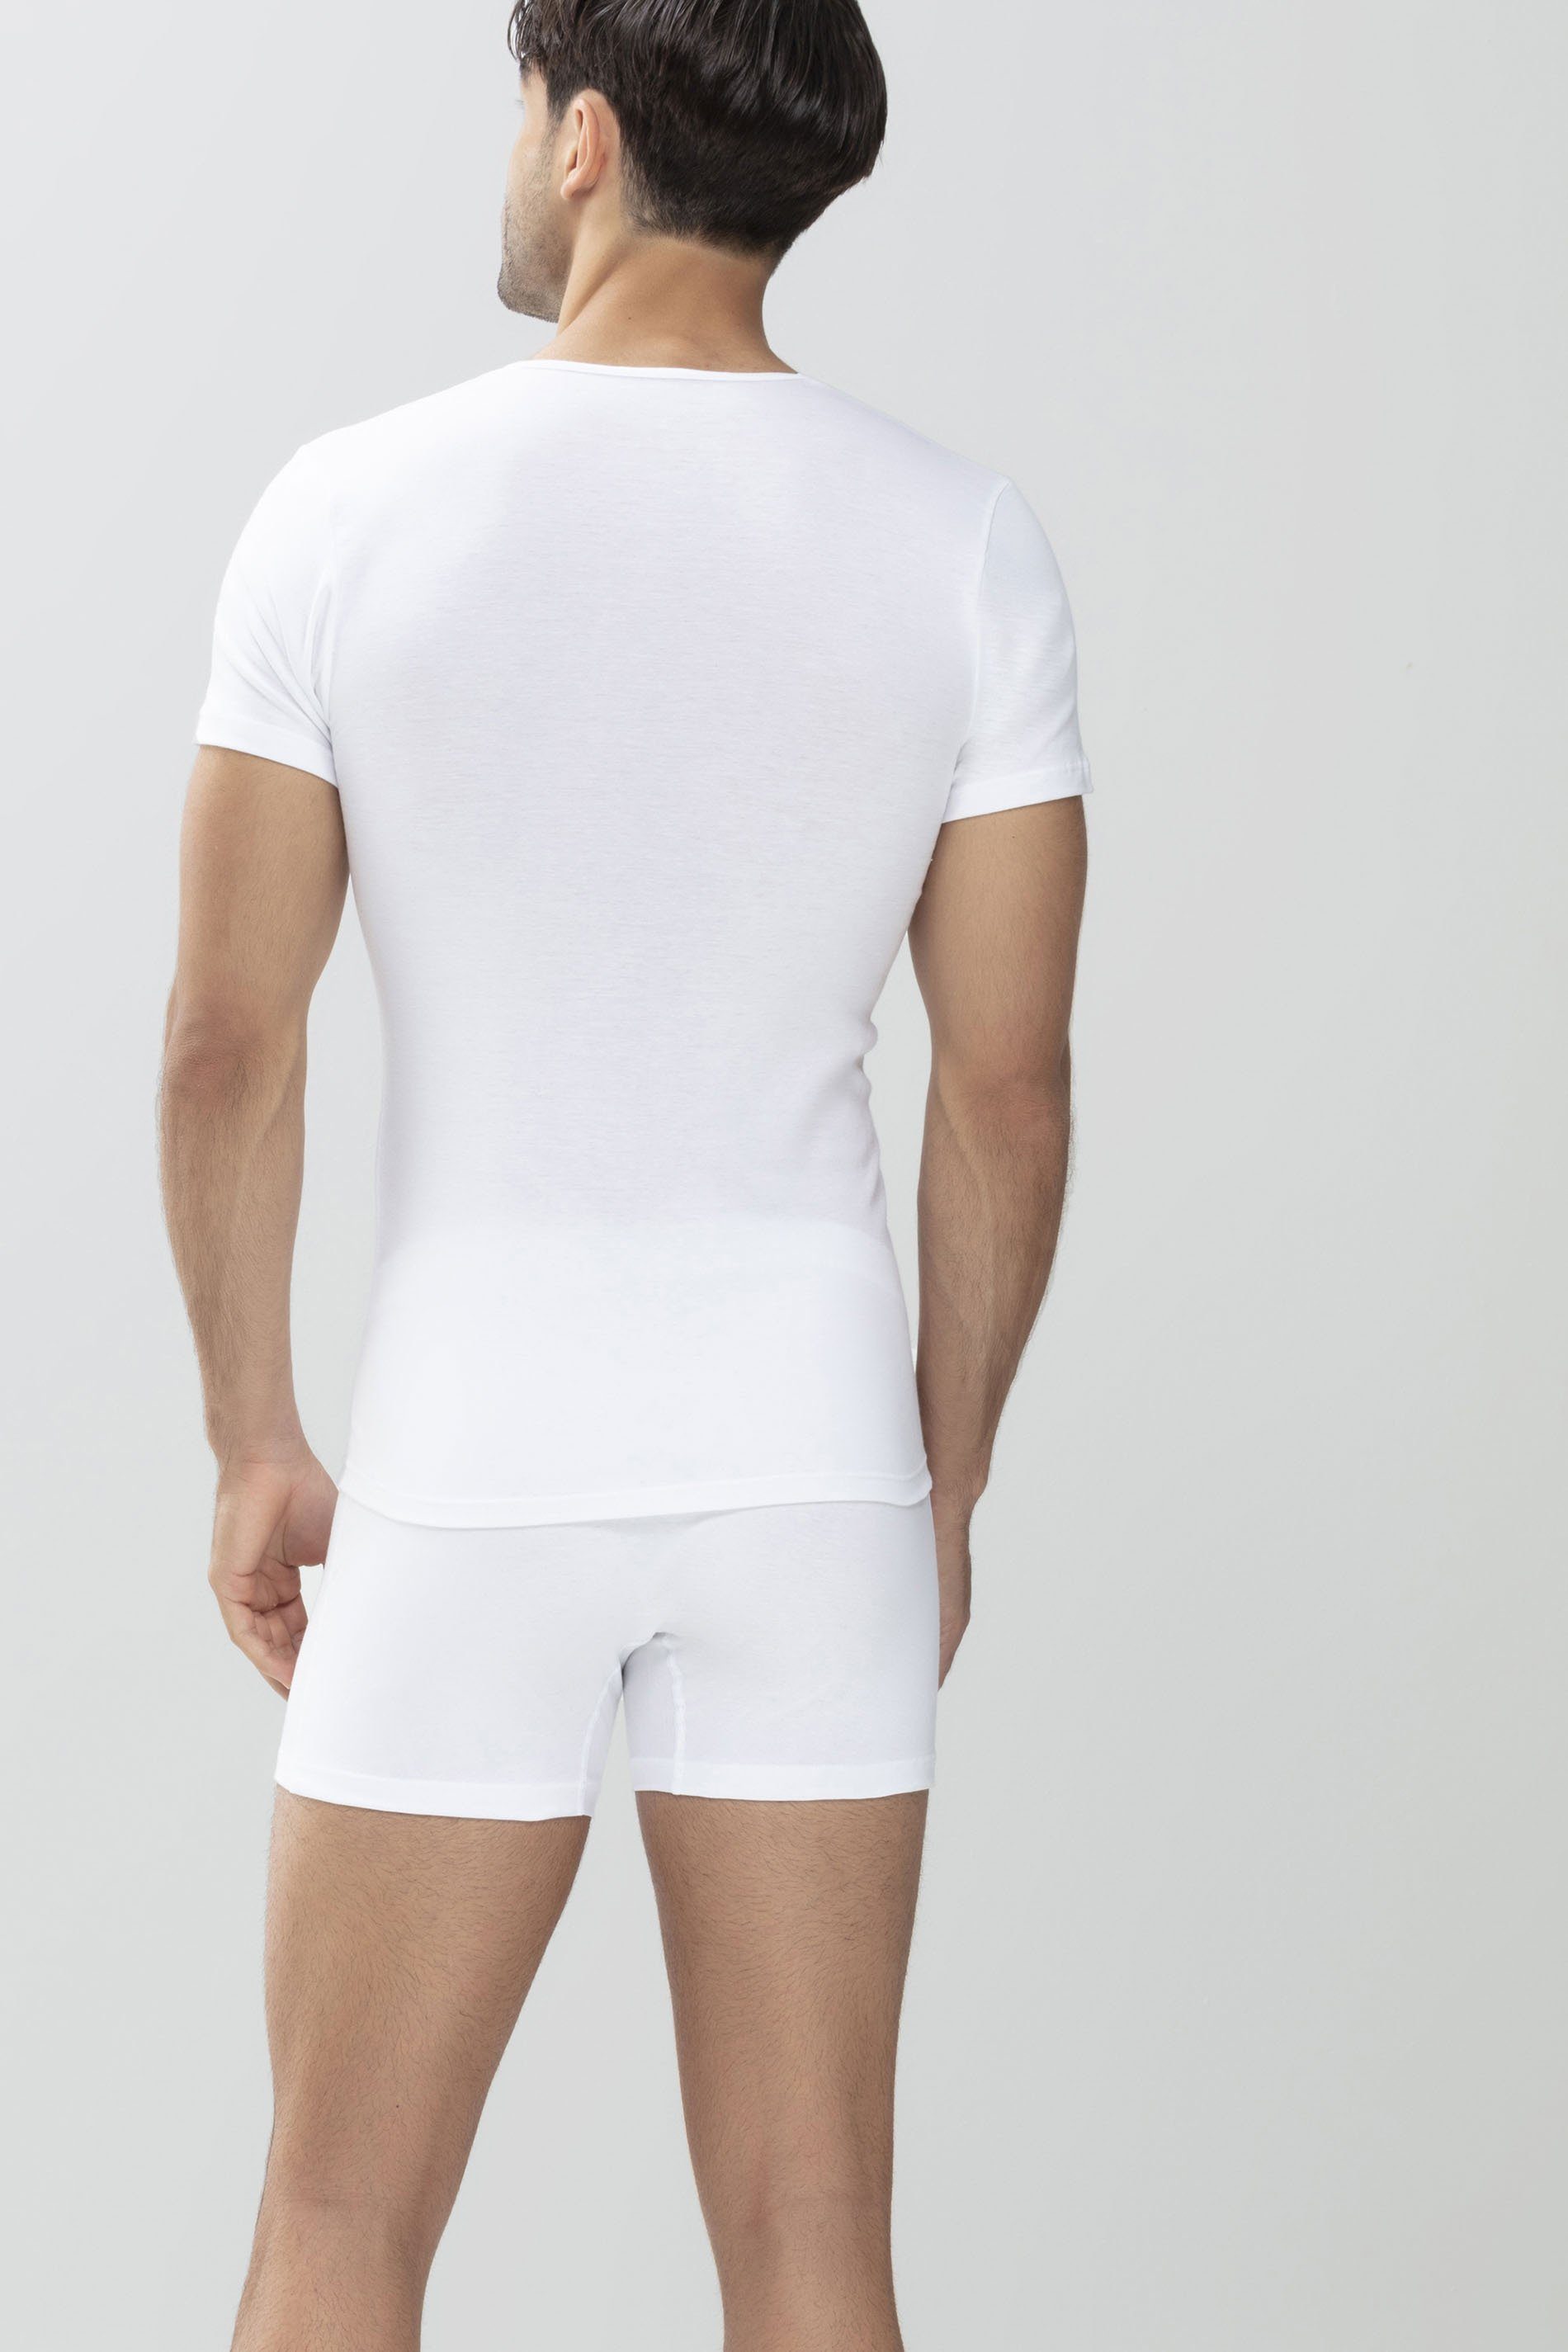 (1-tlg) Mey unifarben Cotton Casual Weiss Serie V-Shirt